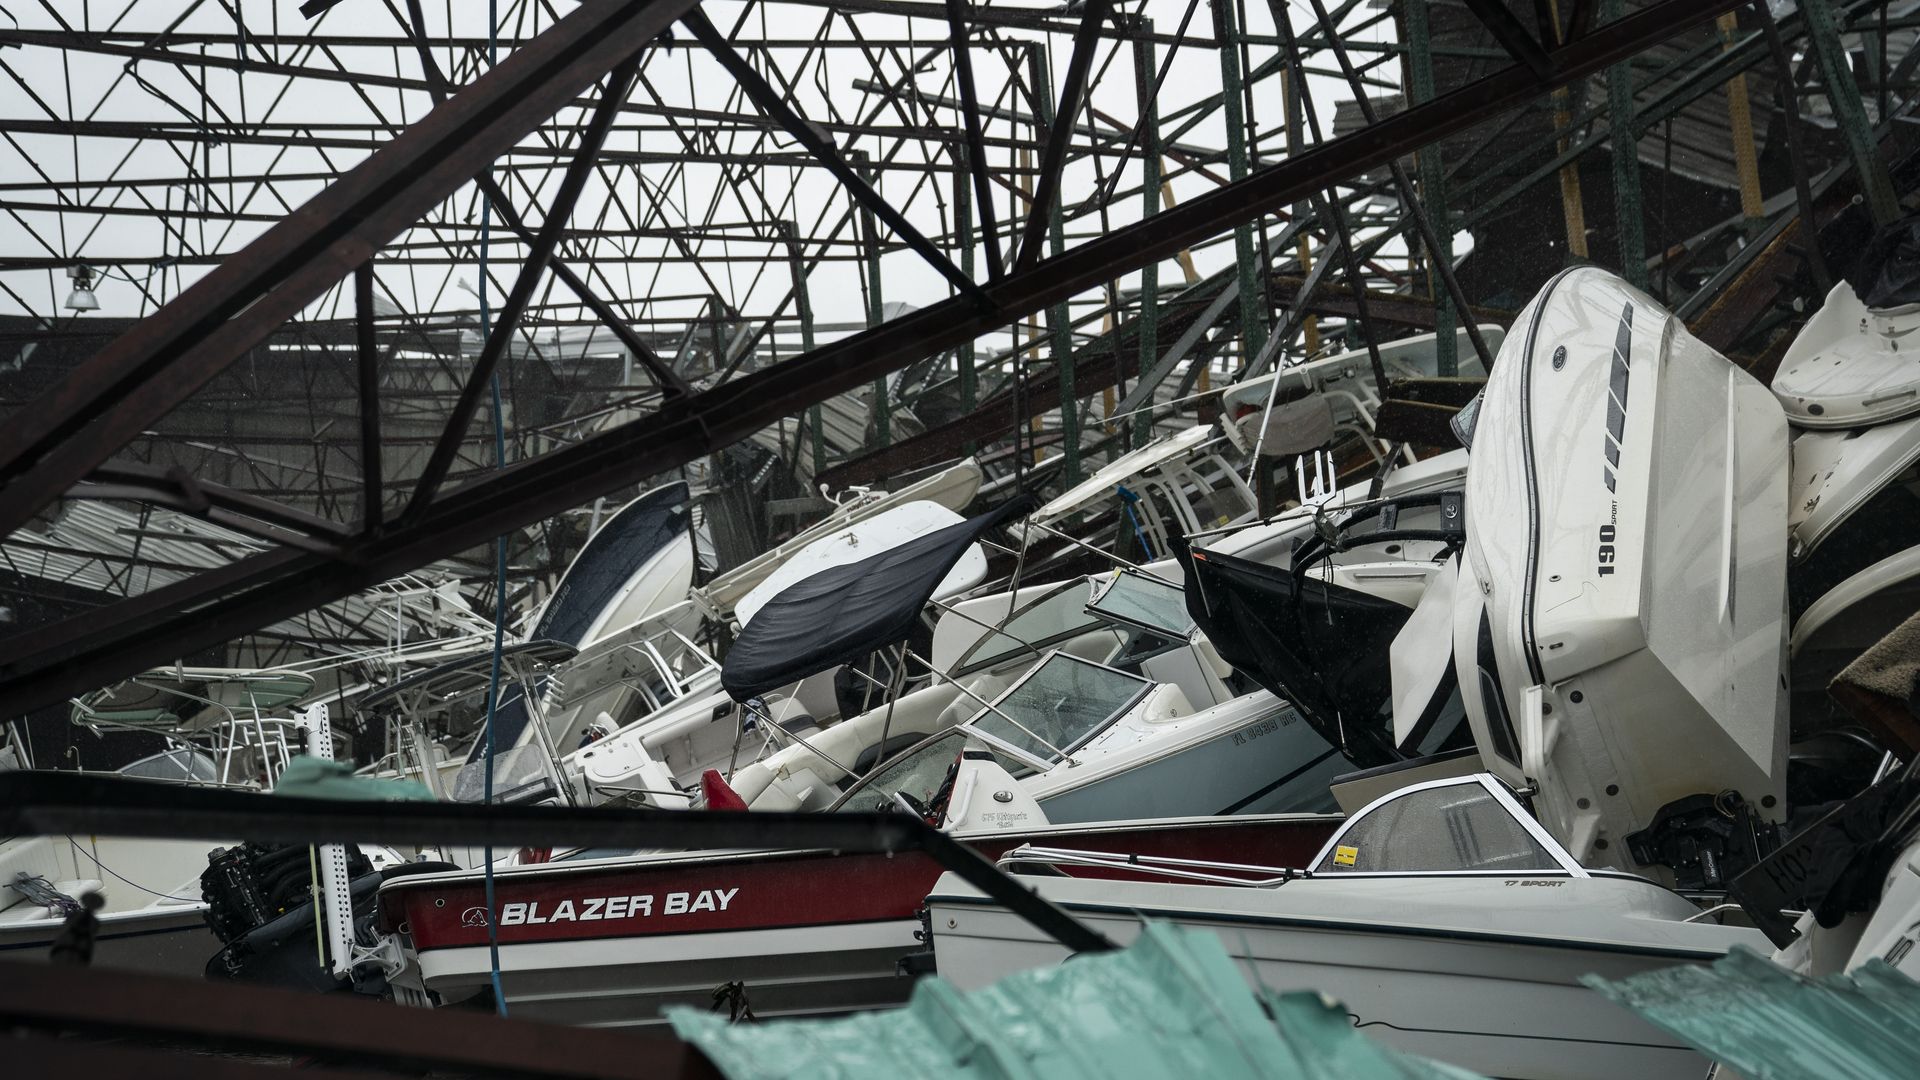 A warehouse of boats damaged